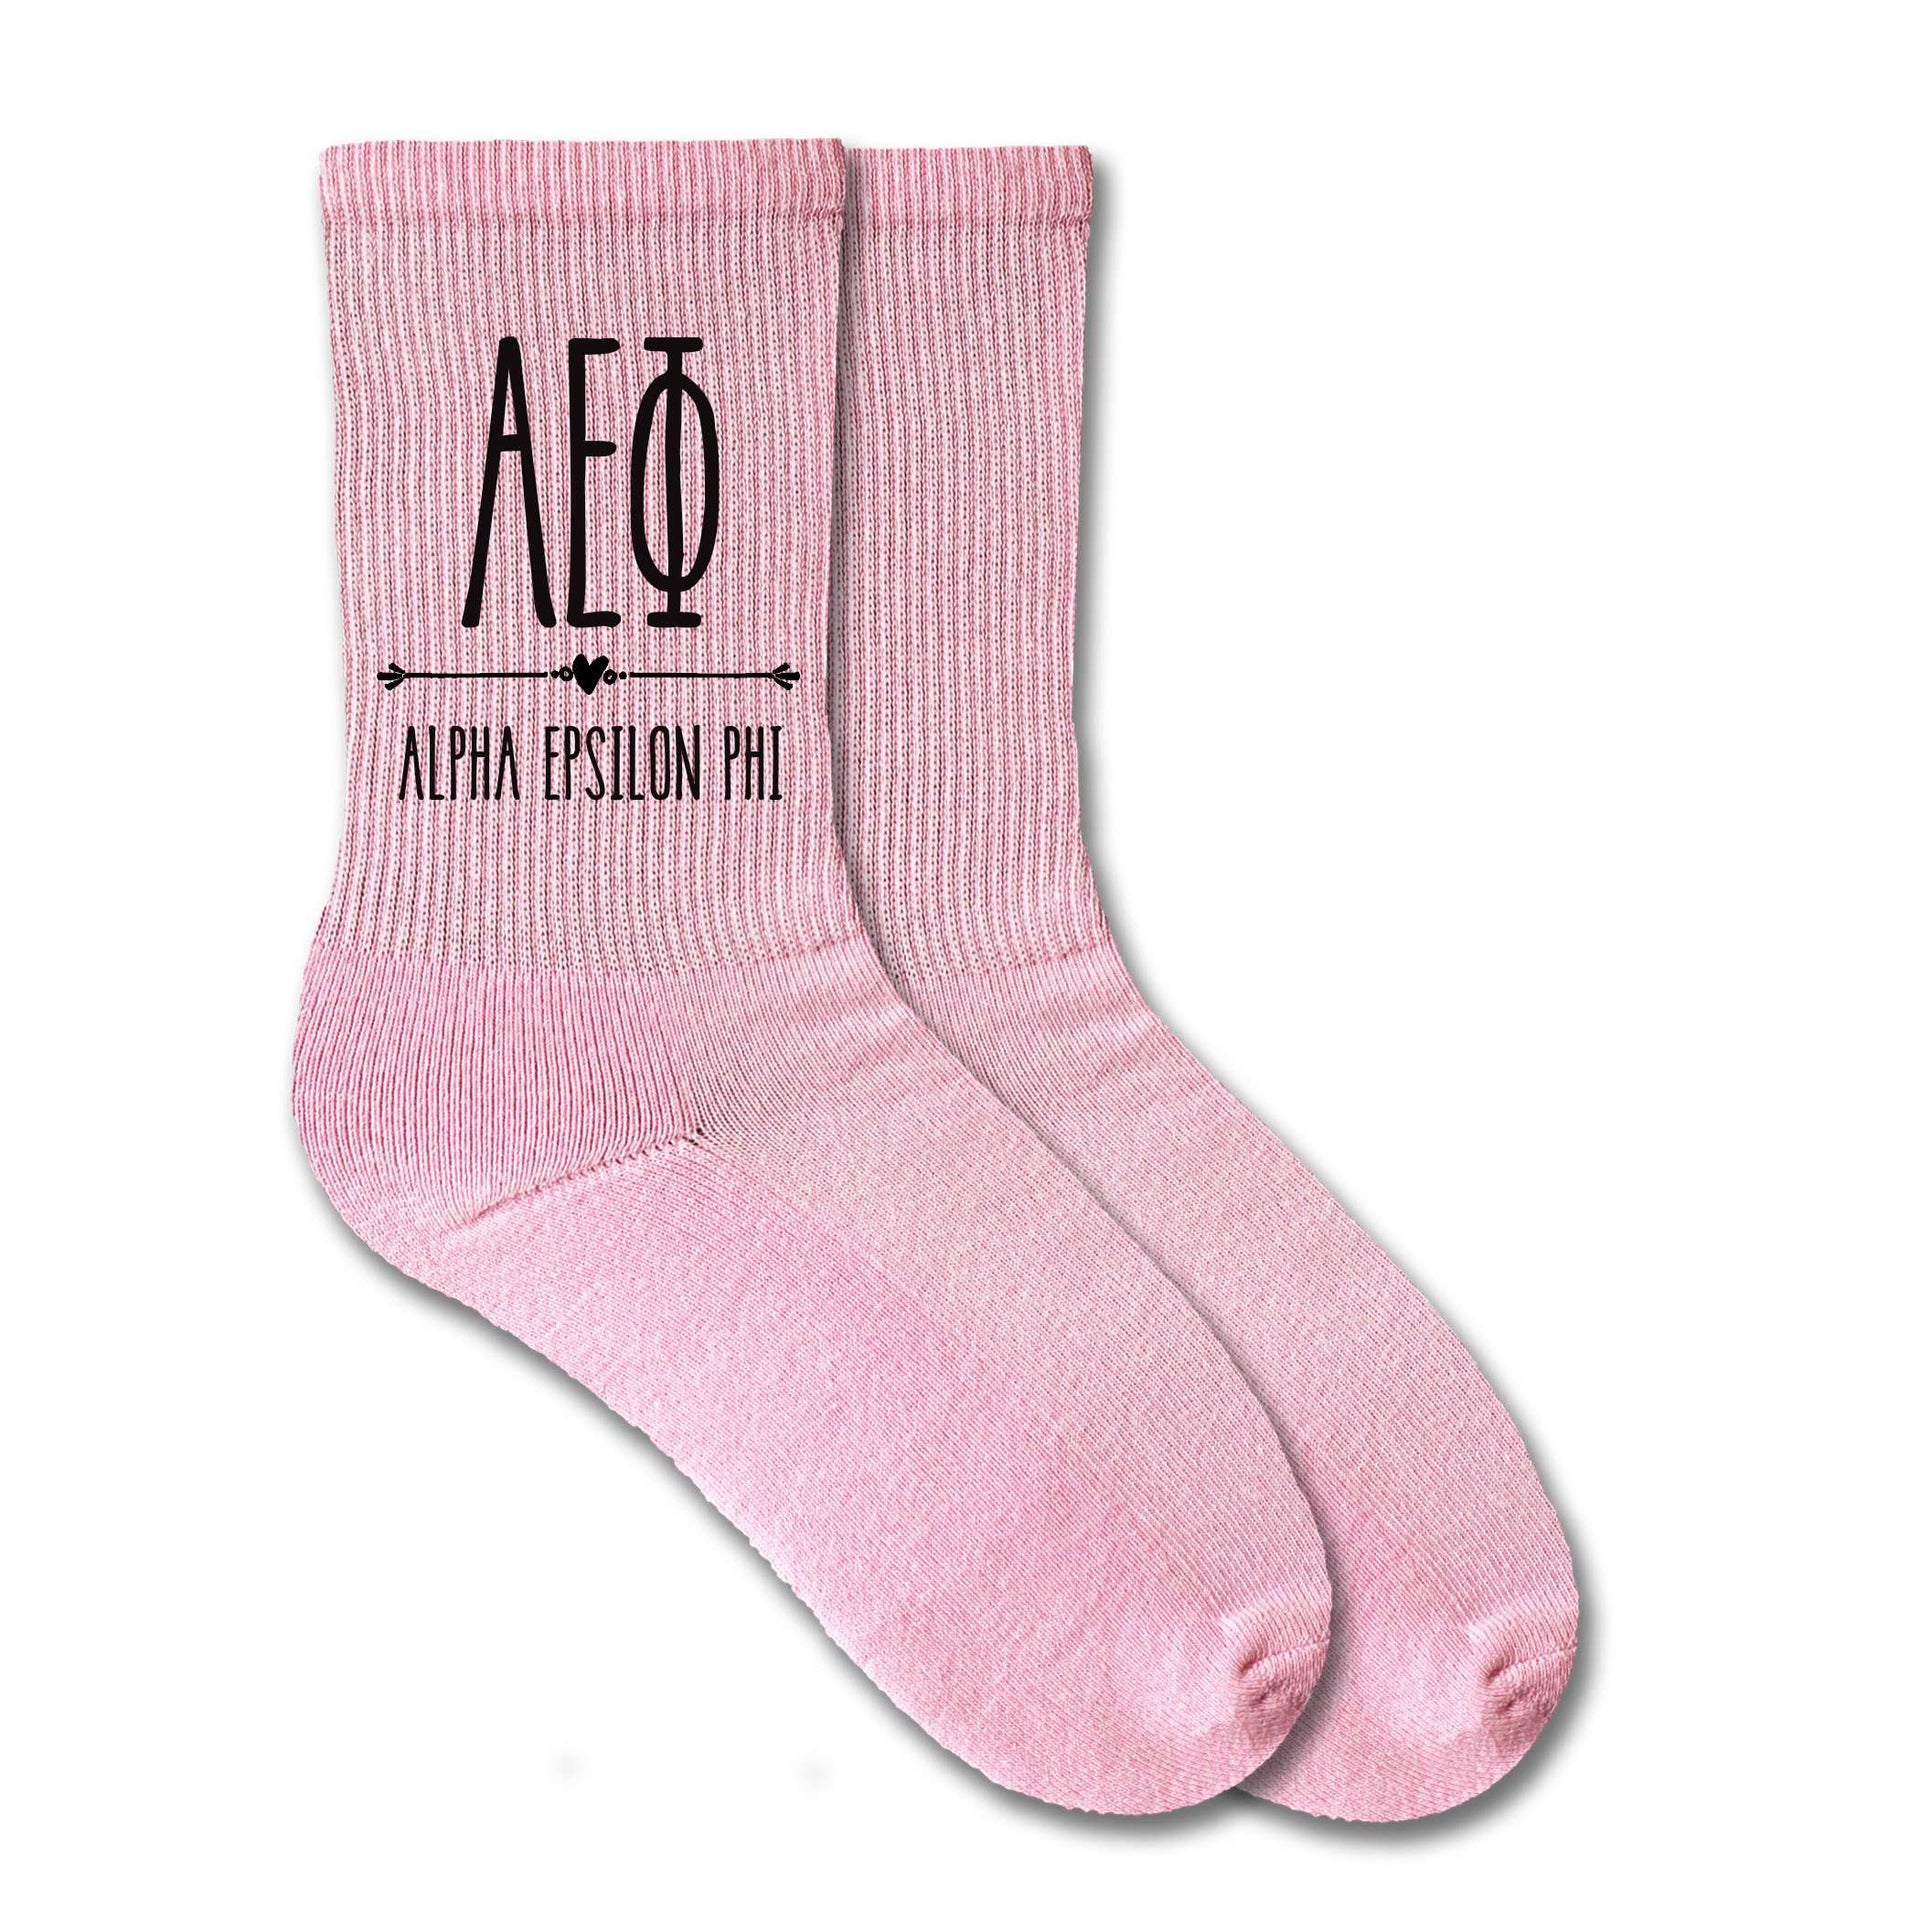 Alpha Epsilon Phi sorority name and letters custom printed on pink crew socks